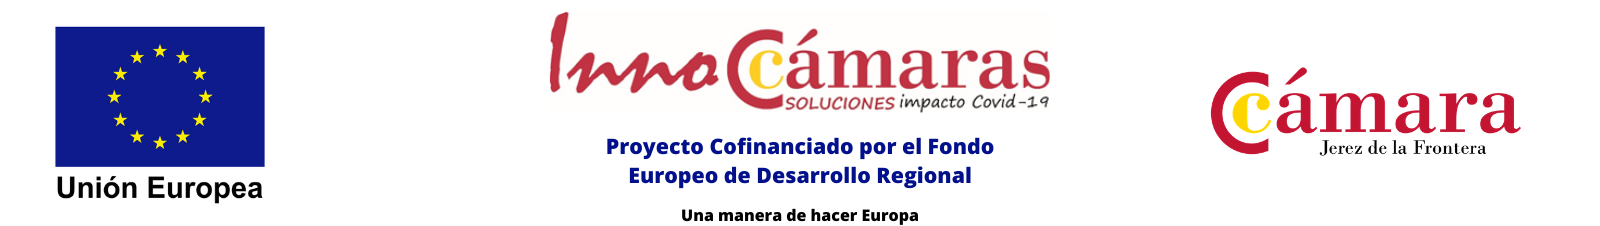 Comunidad Económica Europea, Diputación de Cádiz - Empleo, Cámara de Comercio de España, Cámara de Comercio de Jerez de la Frontera